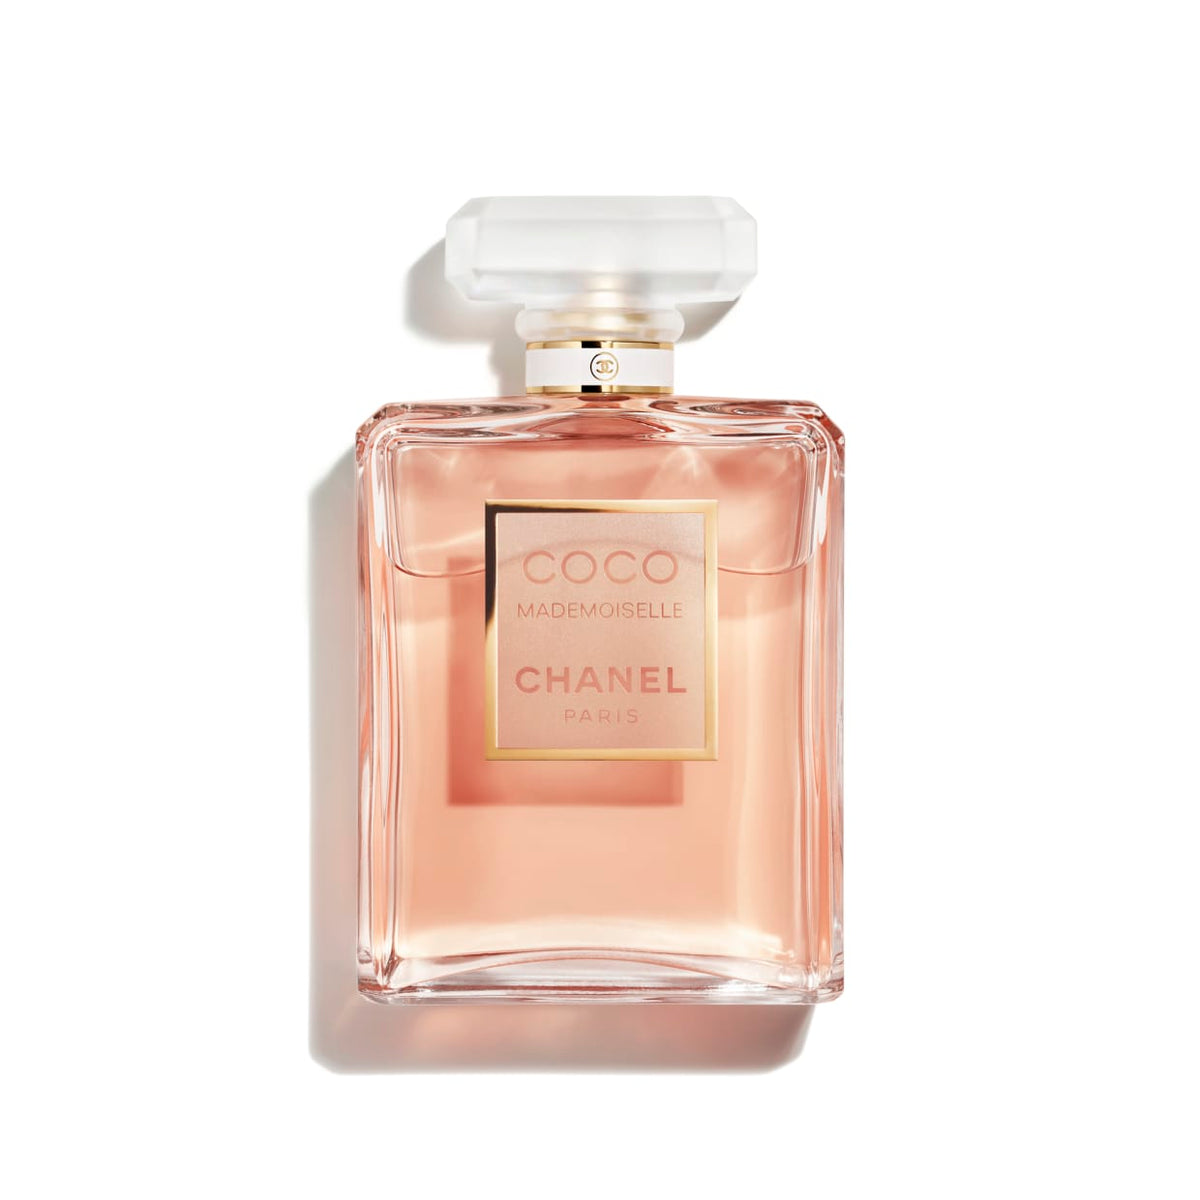 CHANEL coco mademoiselle parfum 6.8 FL OZ – SPRING NUTRITION